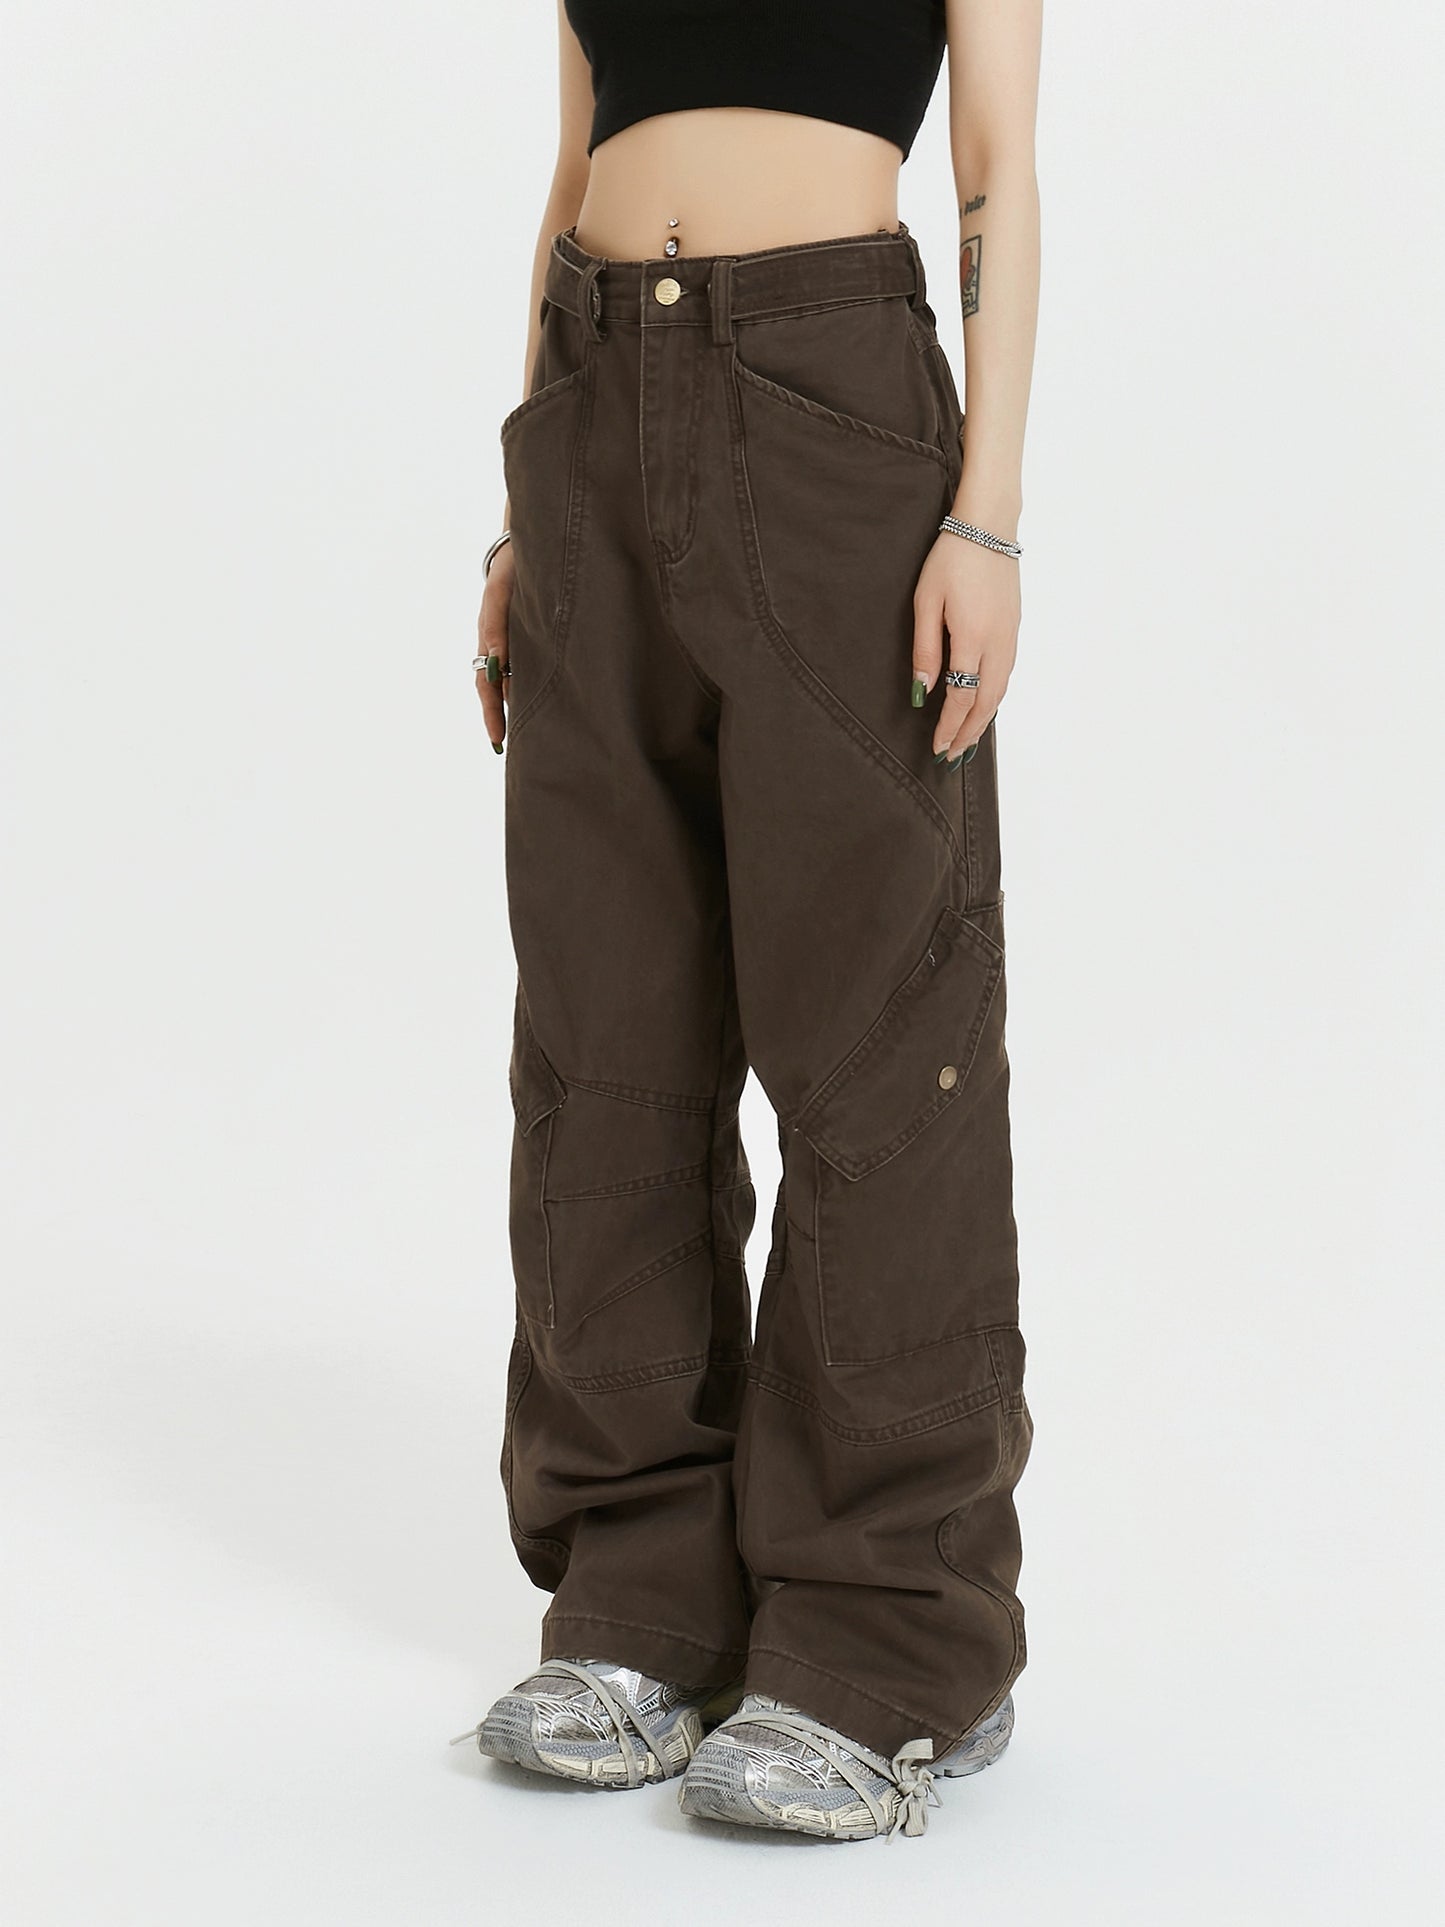 MICHINNYON American pleated multi-pocket cargo pants drape street loose casual fashion trousers